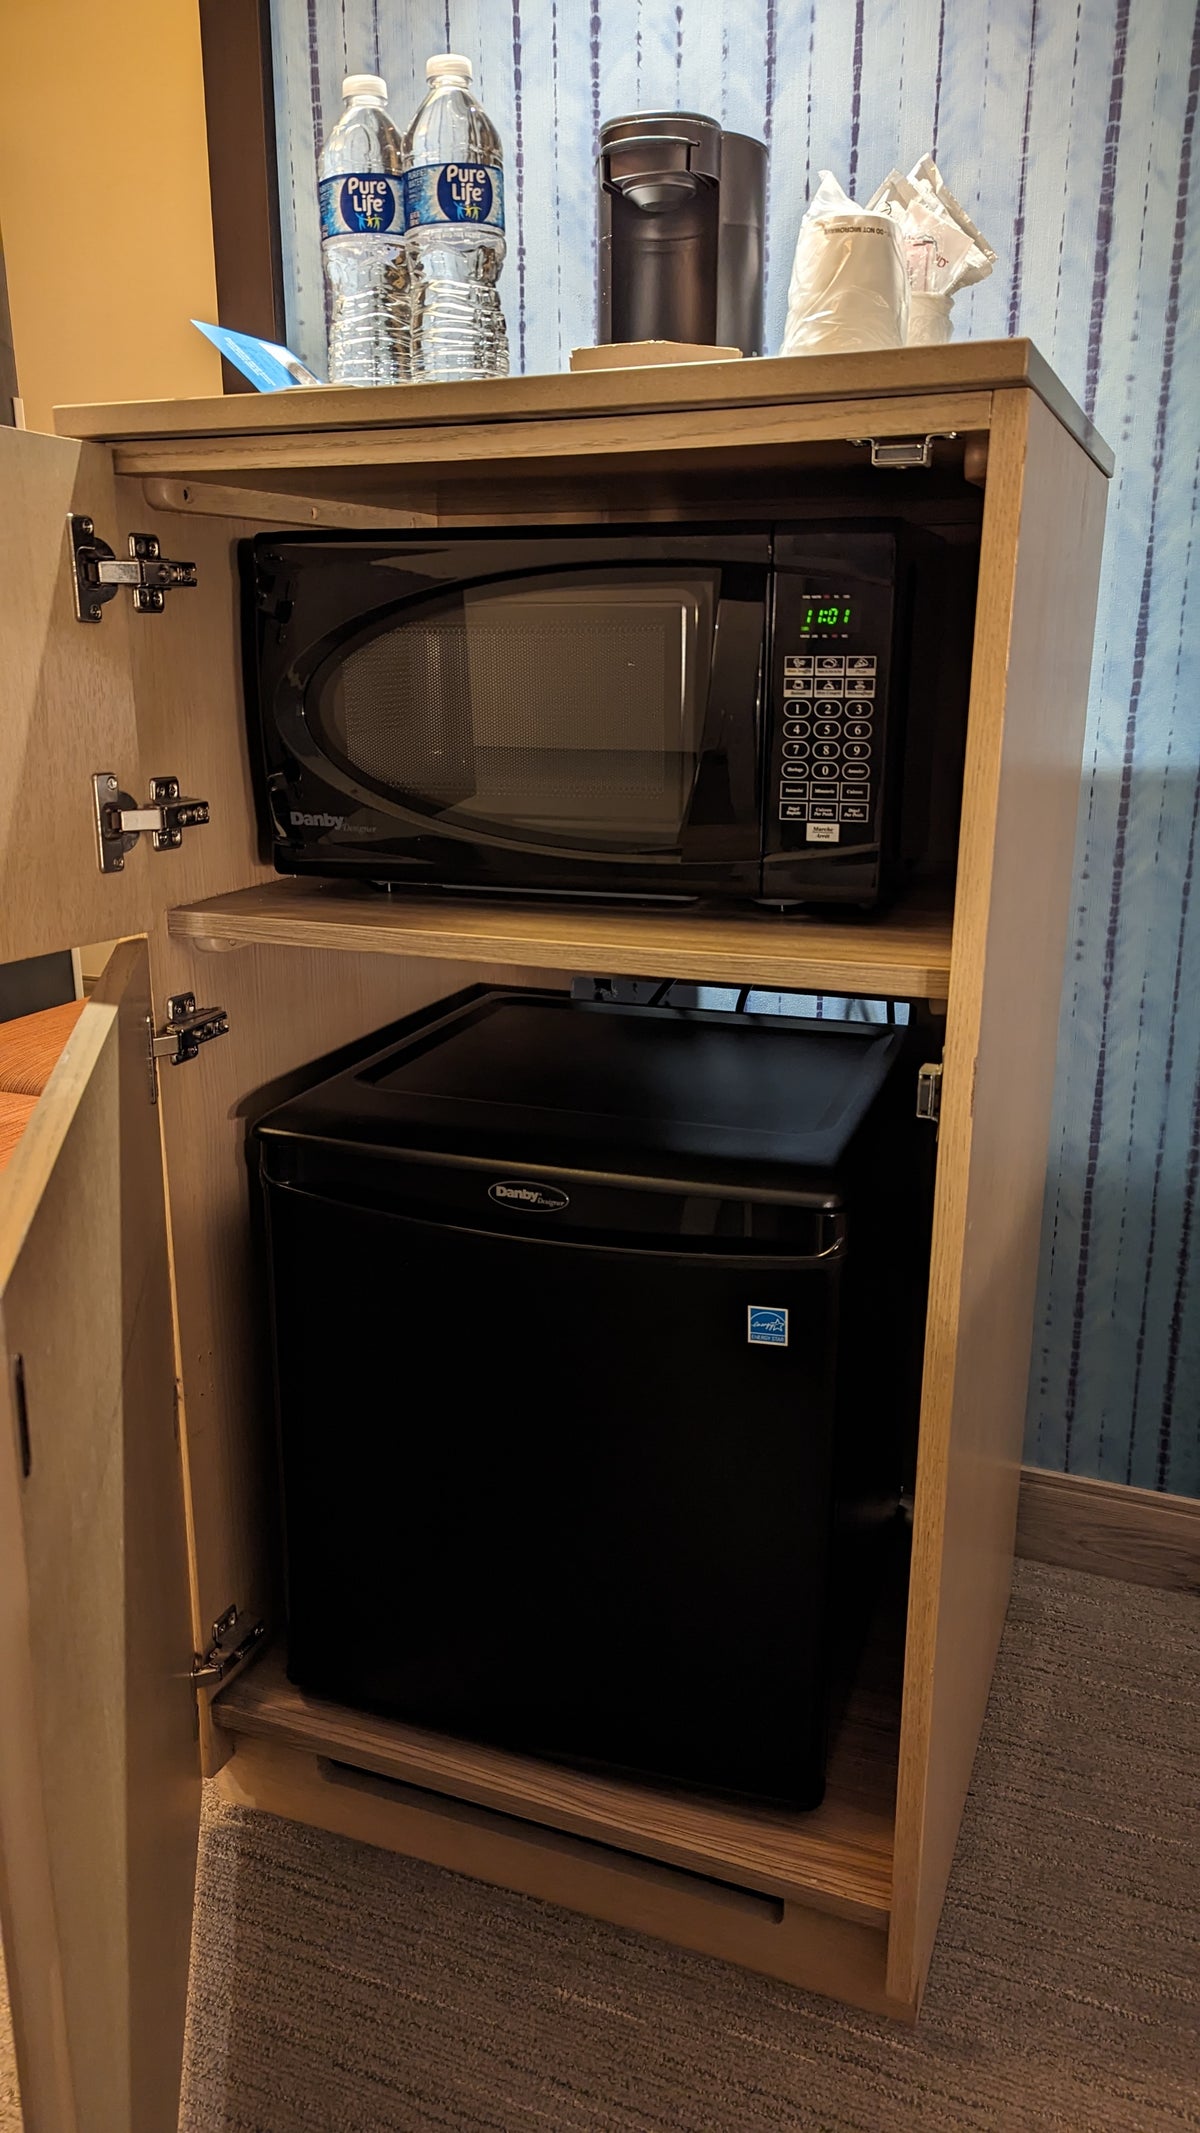 SunCoast Park Hotel Anaheim guestroom refrigerator microwave and coffee